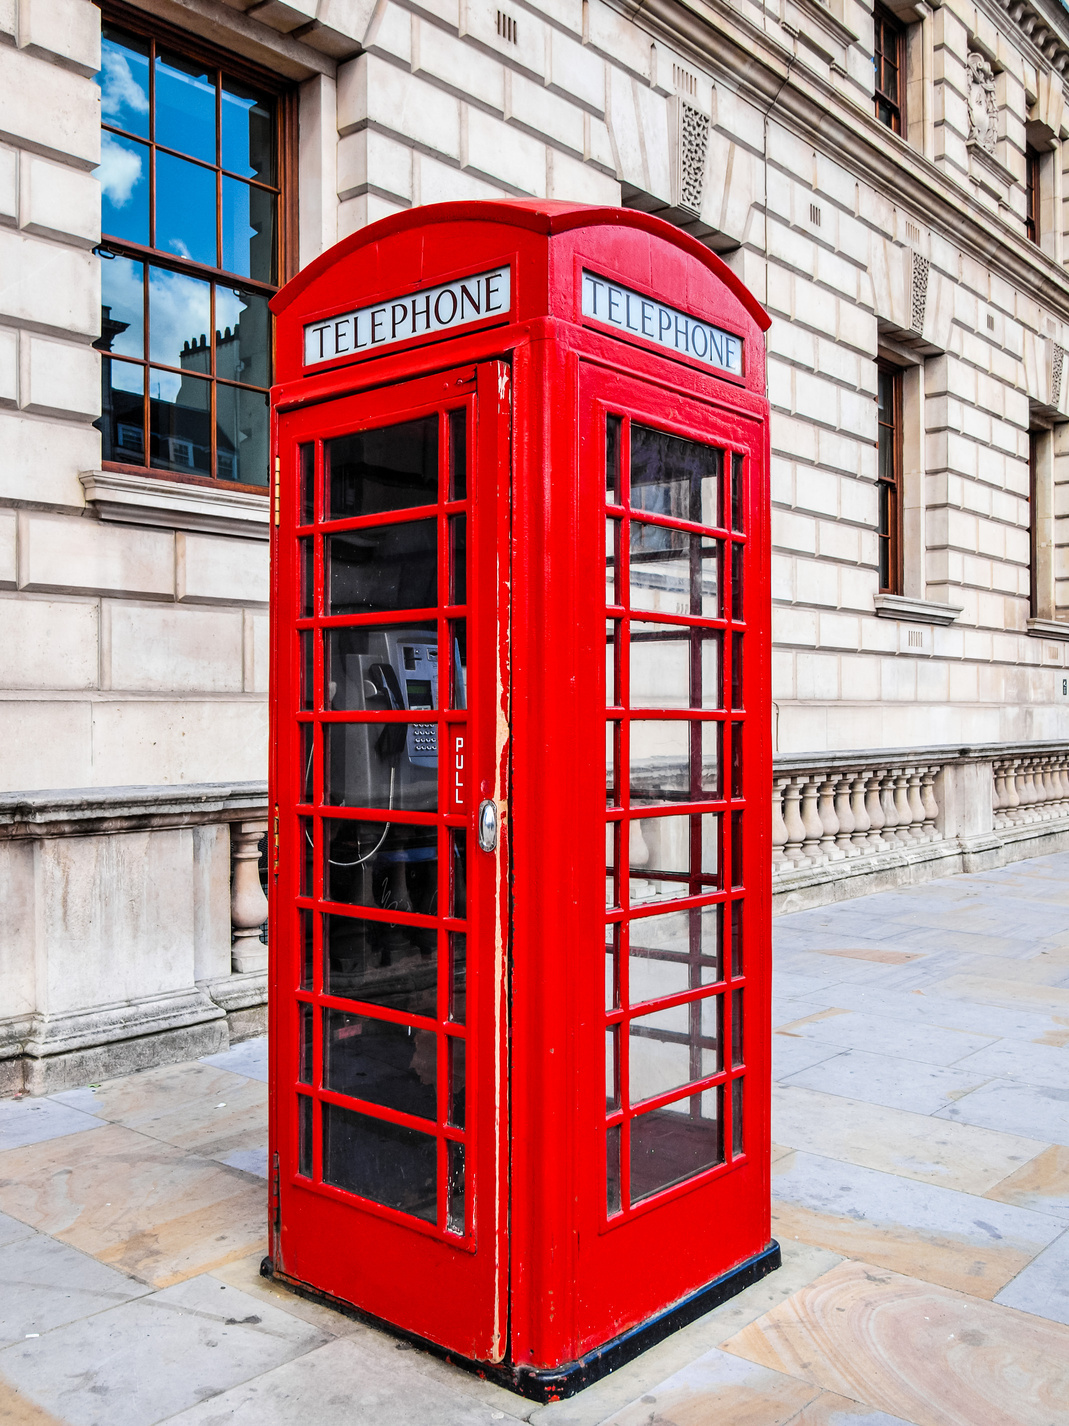 London Telephone Box HDR